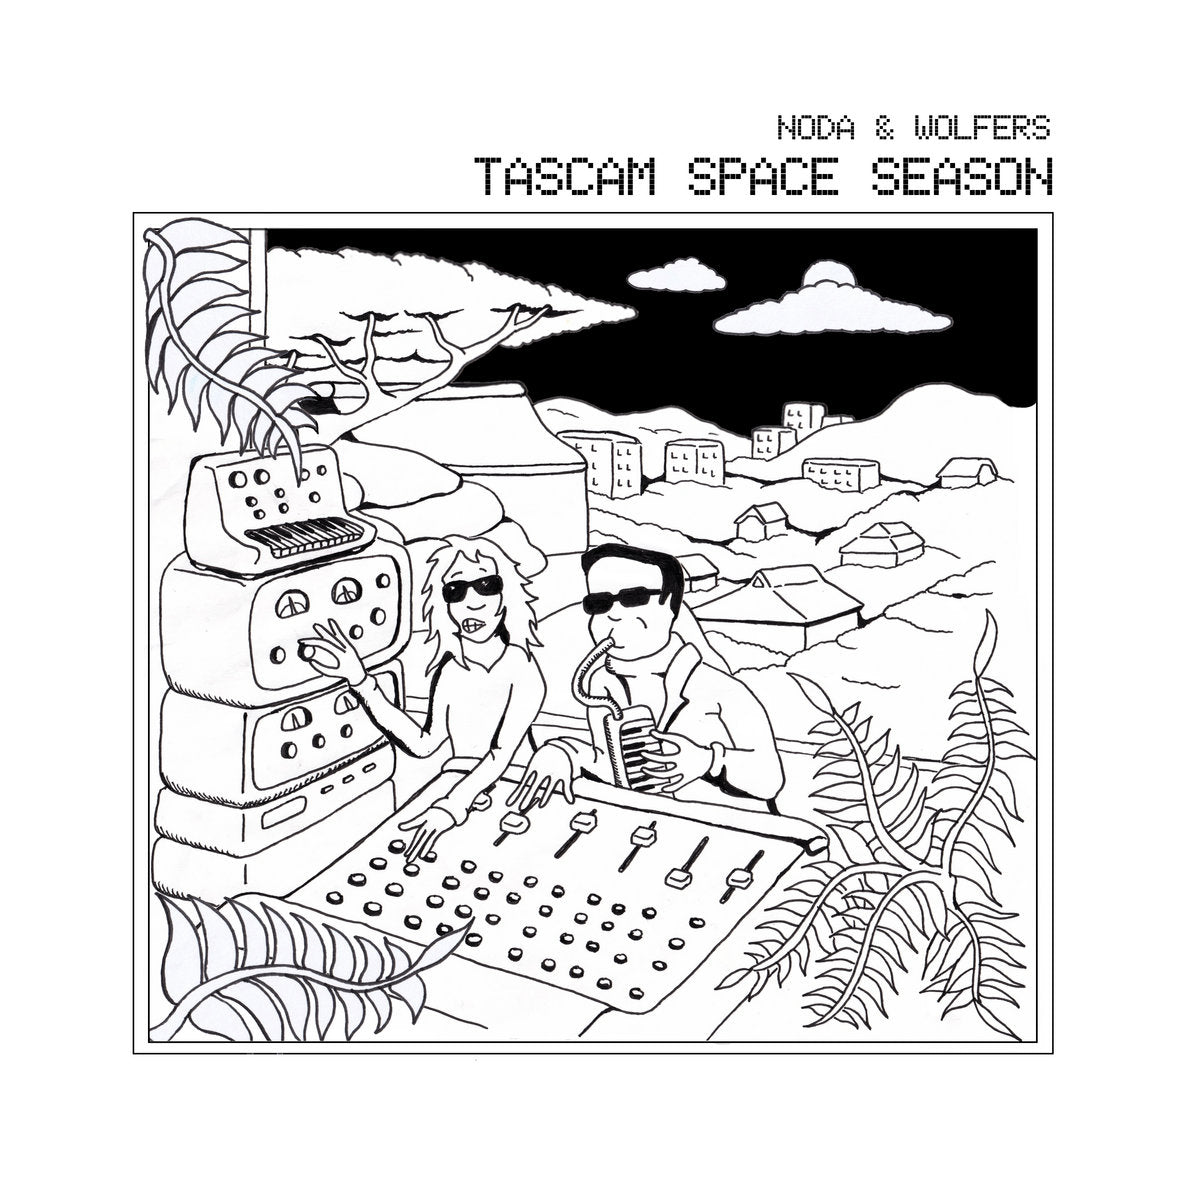 Tascam Space Season (New LP)